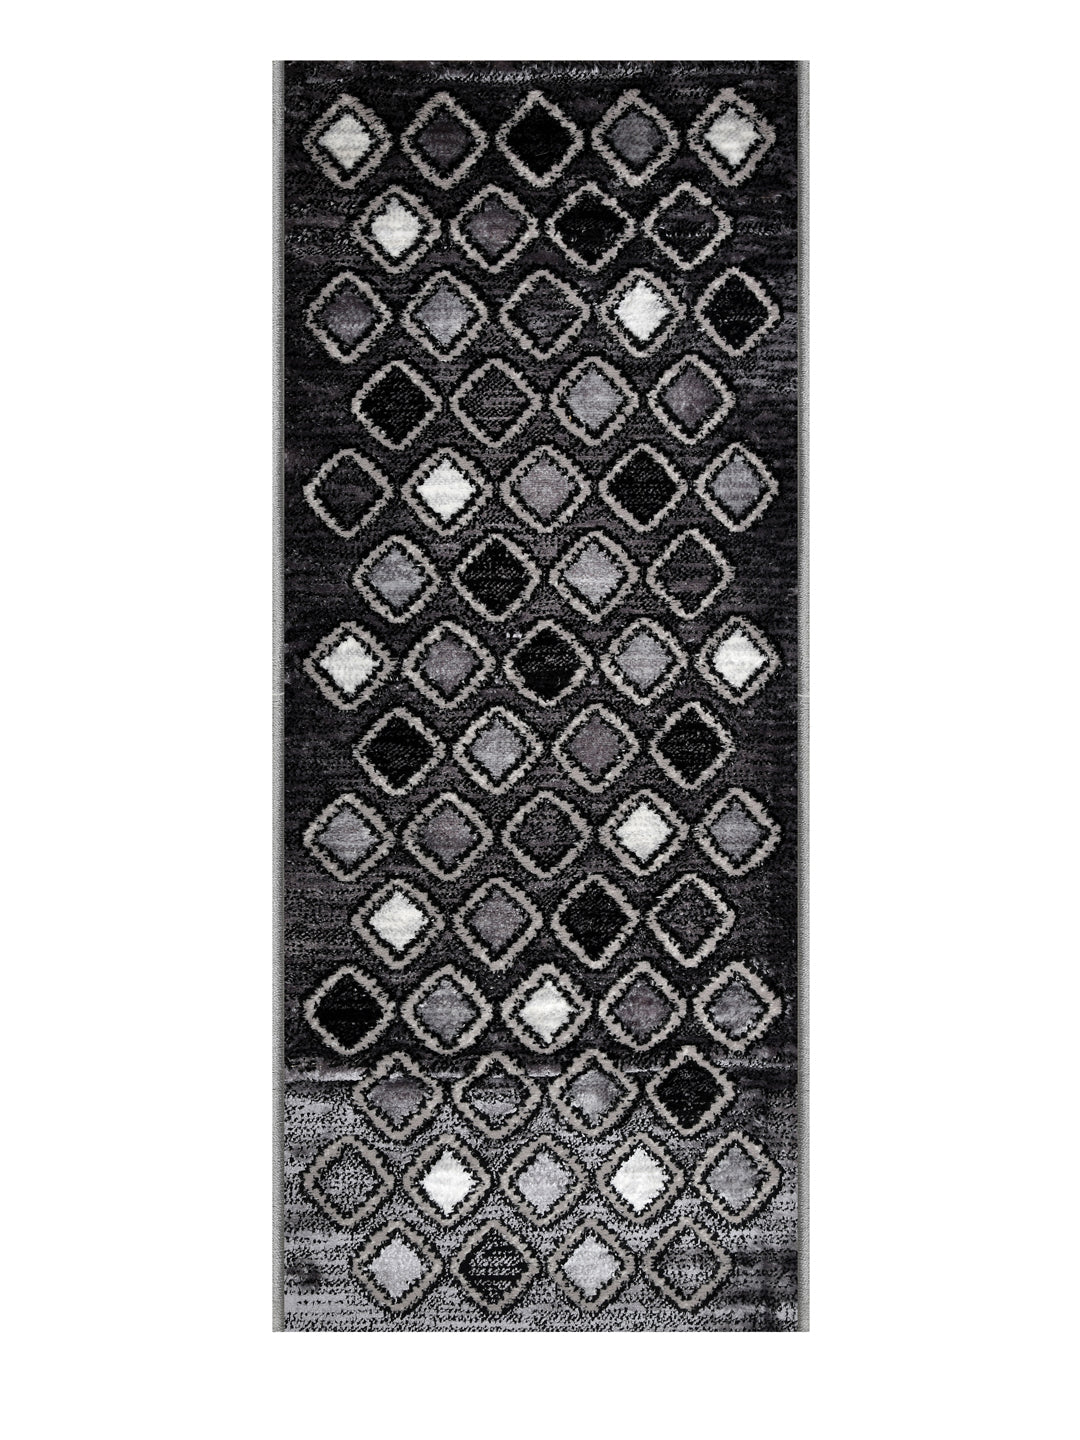 Bedside Runner Carpet Rug With Anti Skid Backing; 57x140 cms; Black Grey